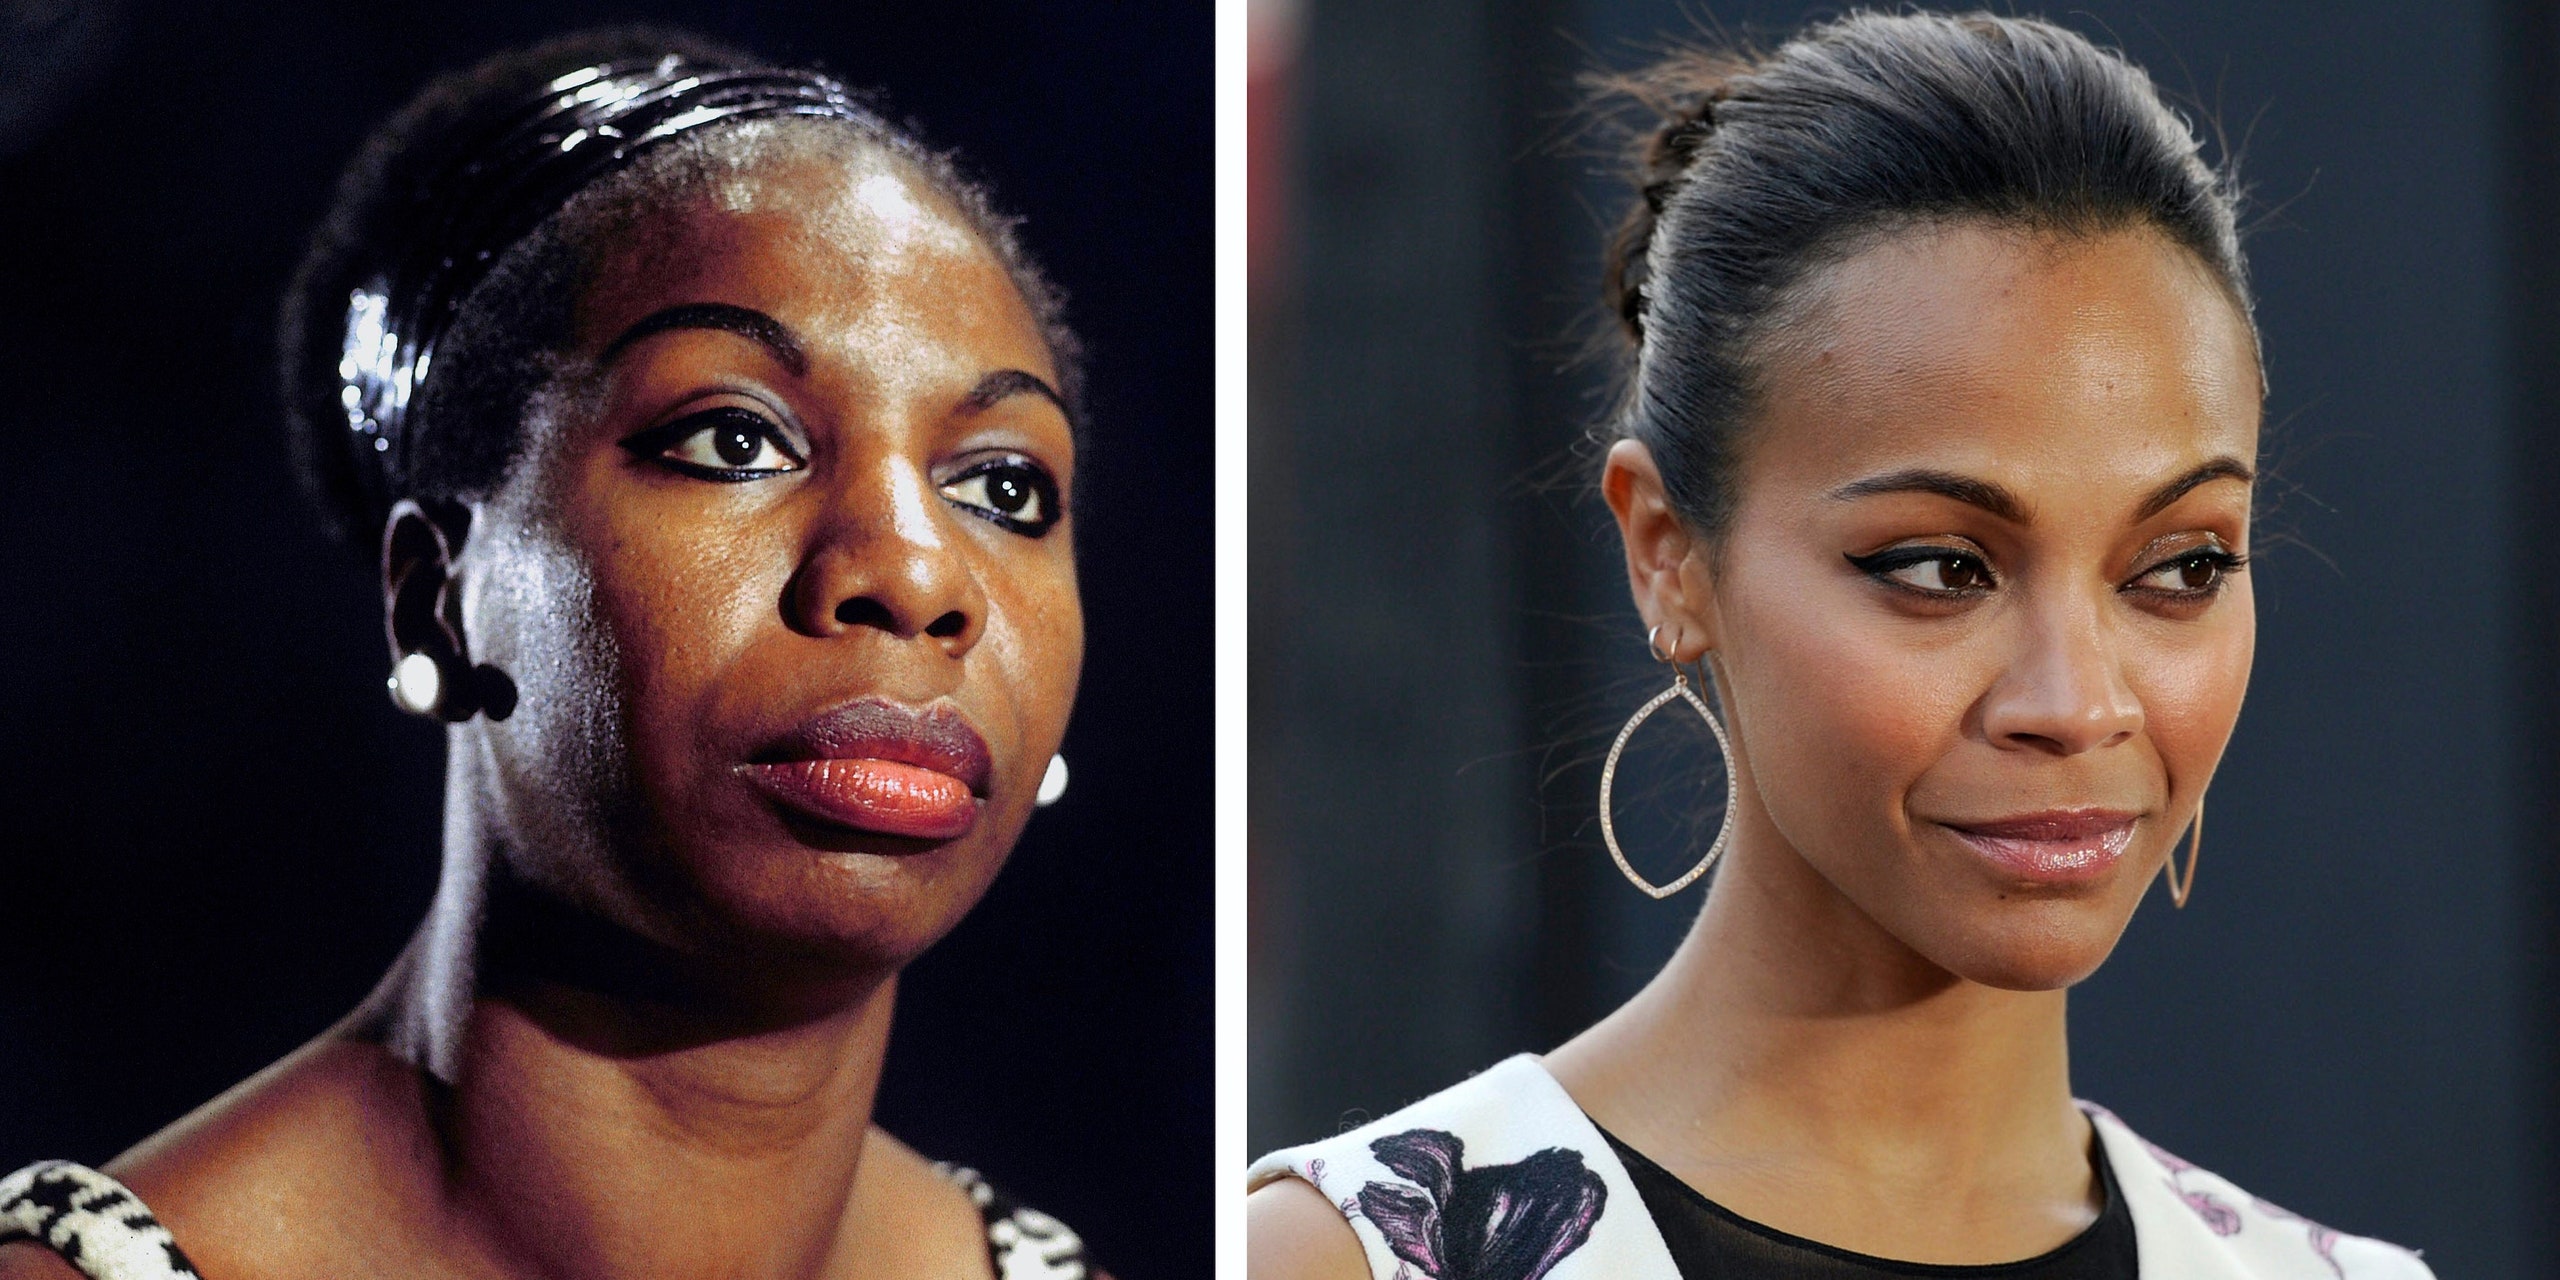 Zoe Saldana Apologises for Playing Nina Simone in Biopic, “I Know Better Today”